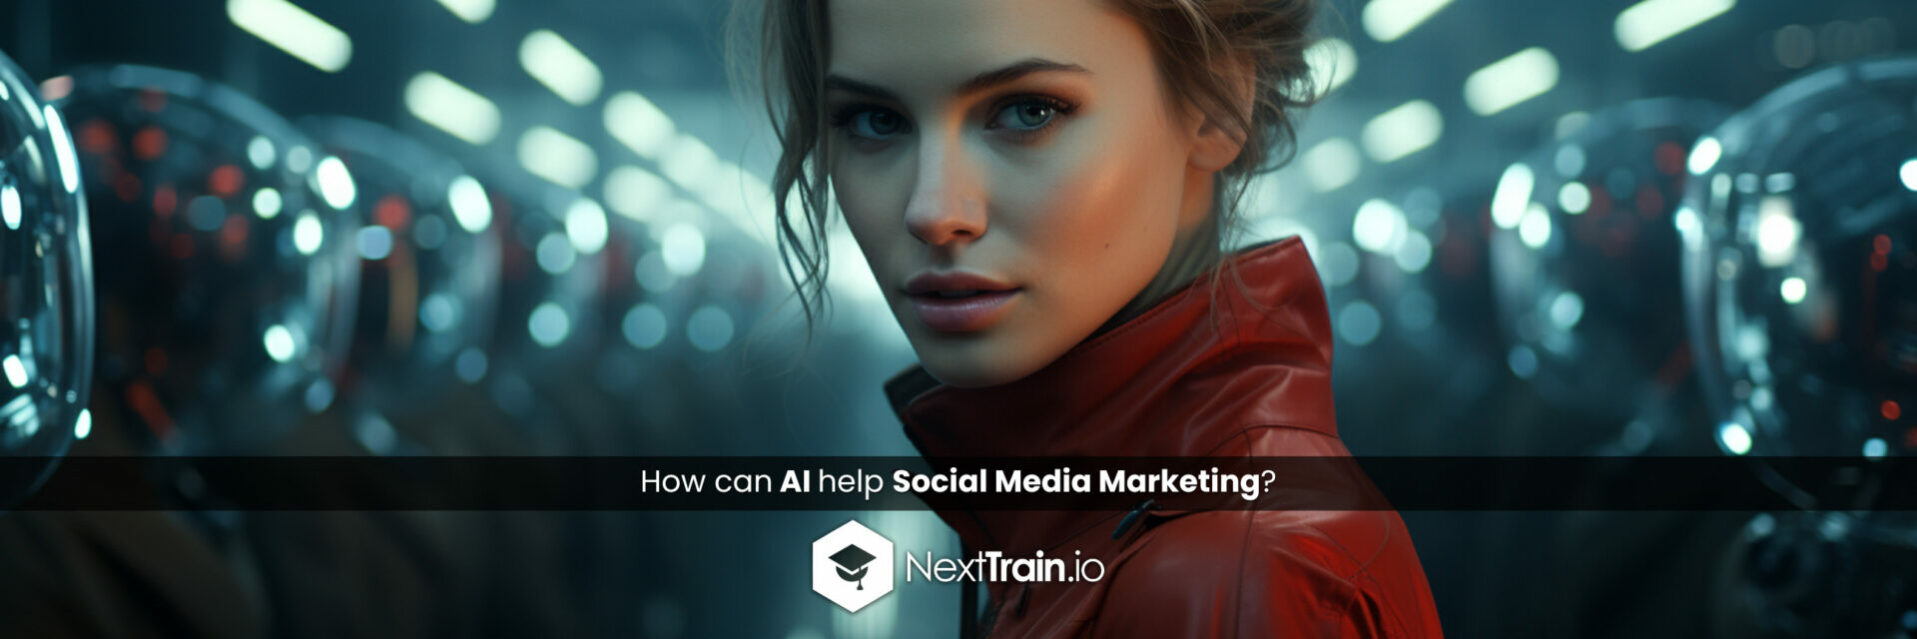 How can AI help Social Media Marketing?